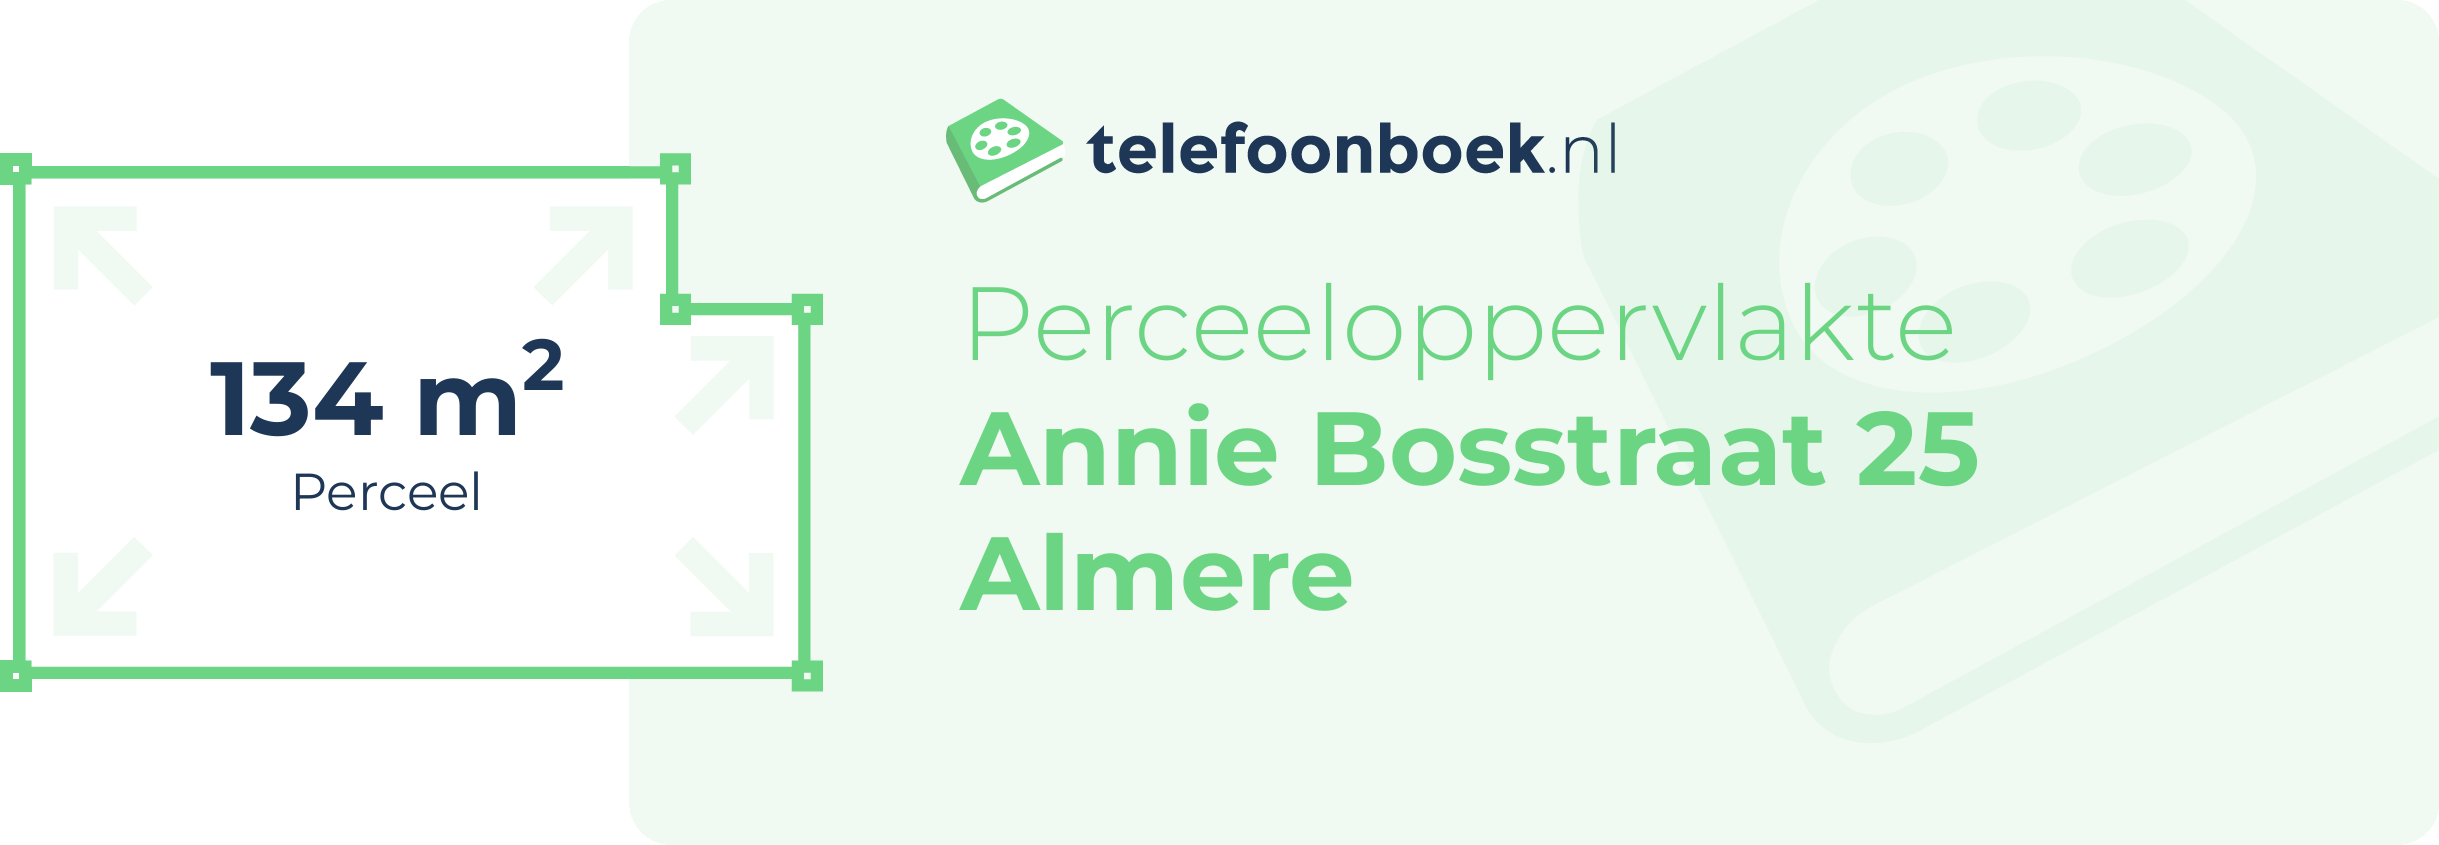 Perceeloppervlakte Annie Bosstraat 25 Almere